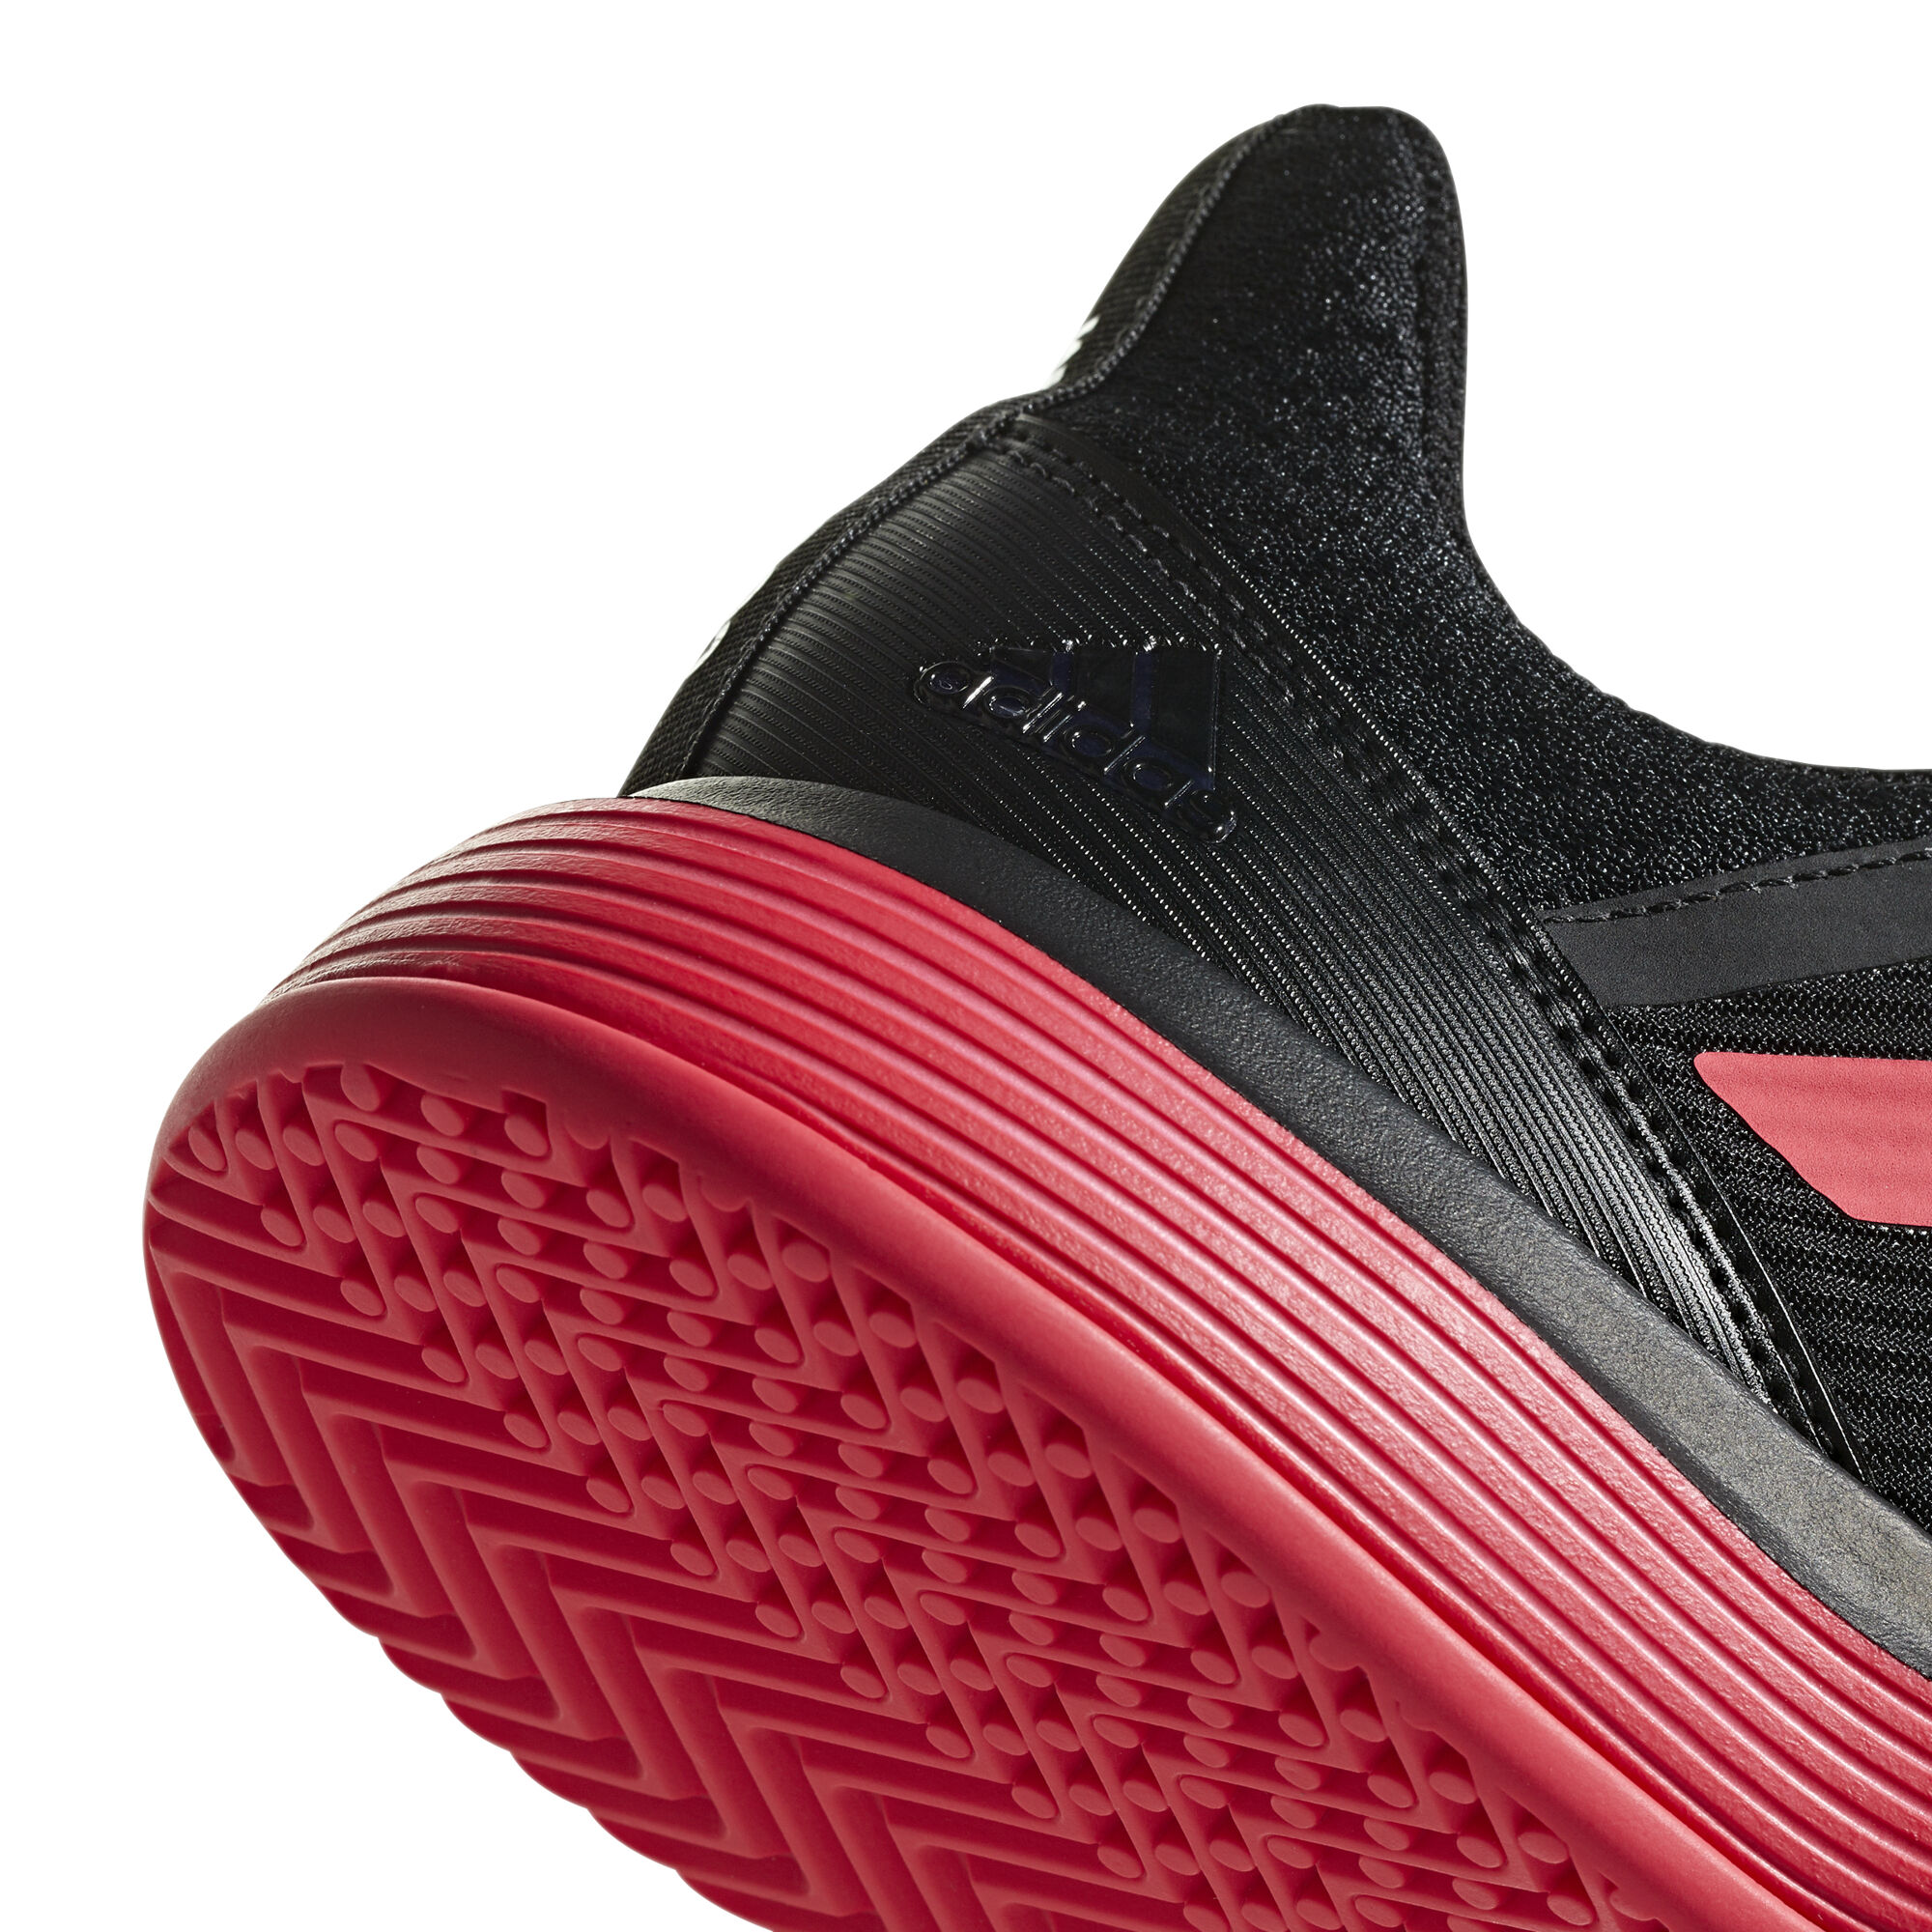 adidas men's courtjam bounce tennis shoes